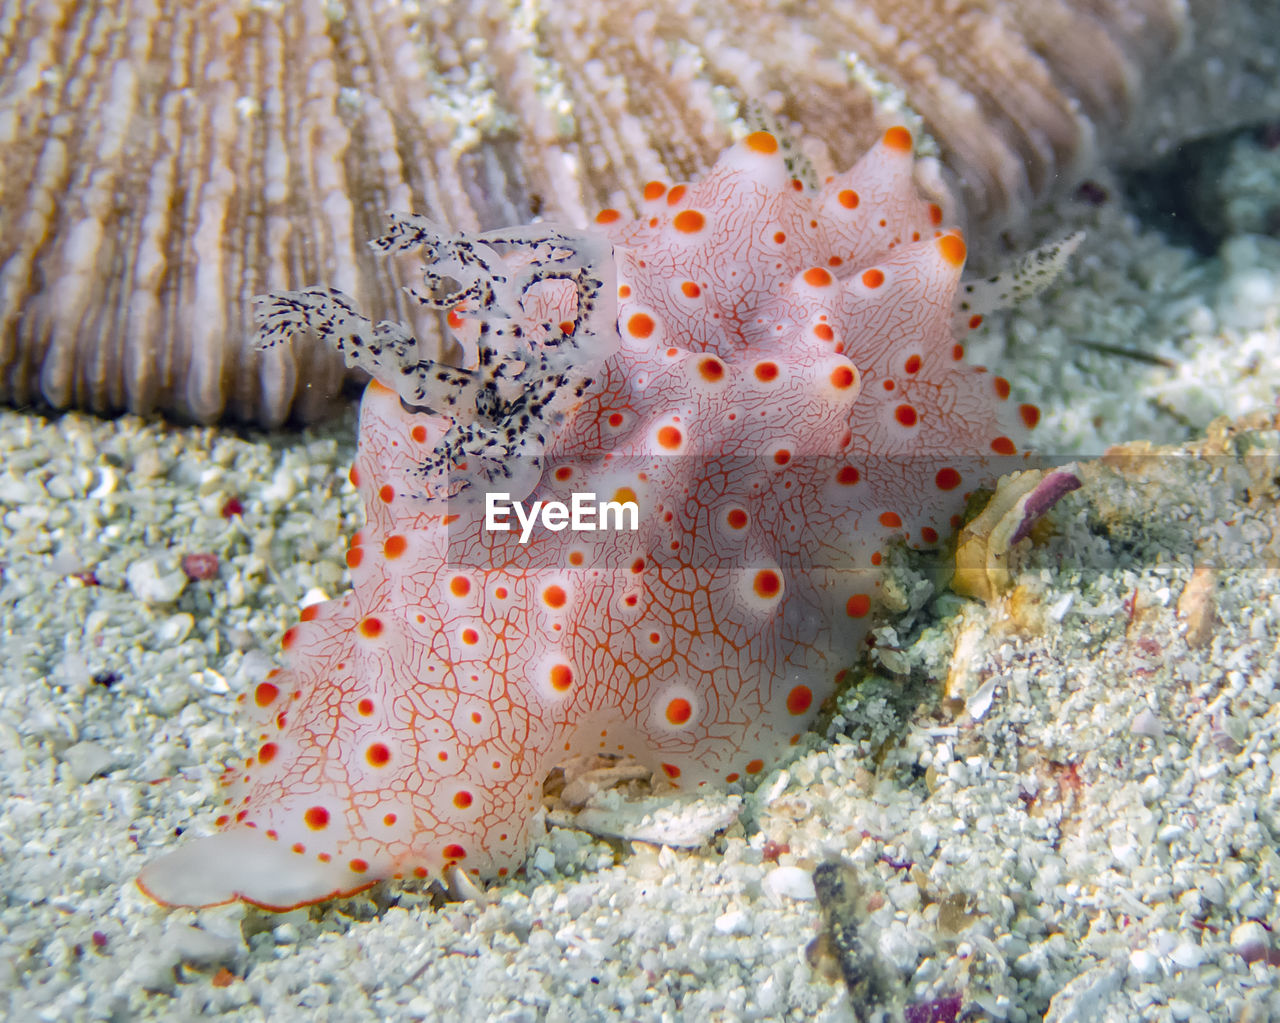 Close up of a halgerda batangas sea slug